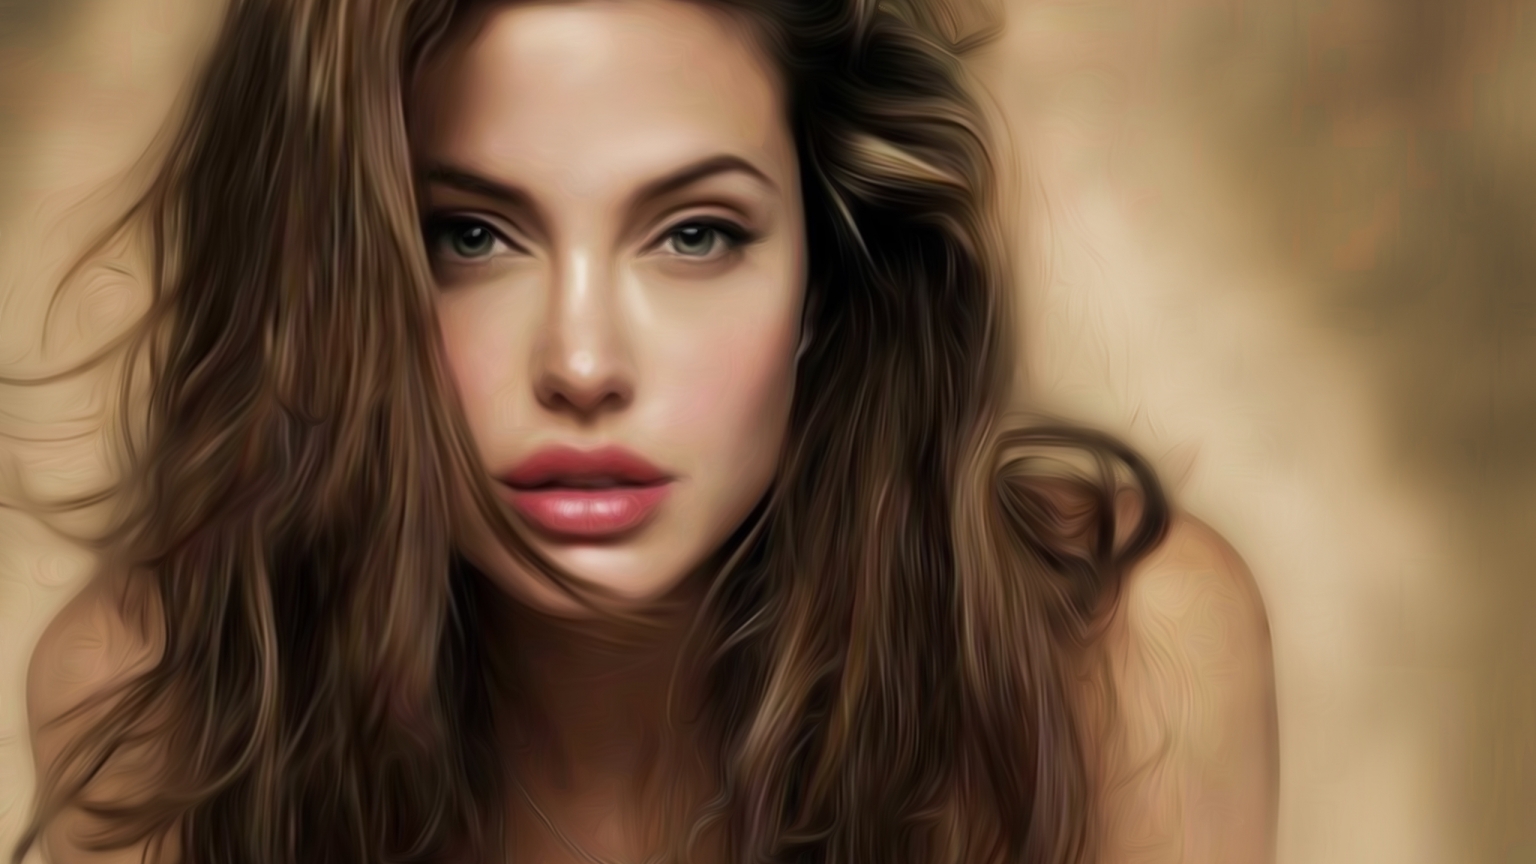 Angelina Jolie Look Art for 1536 x 864 HDTV resolution